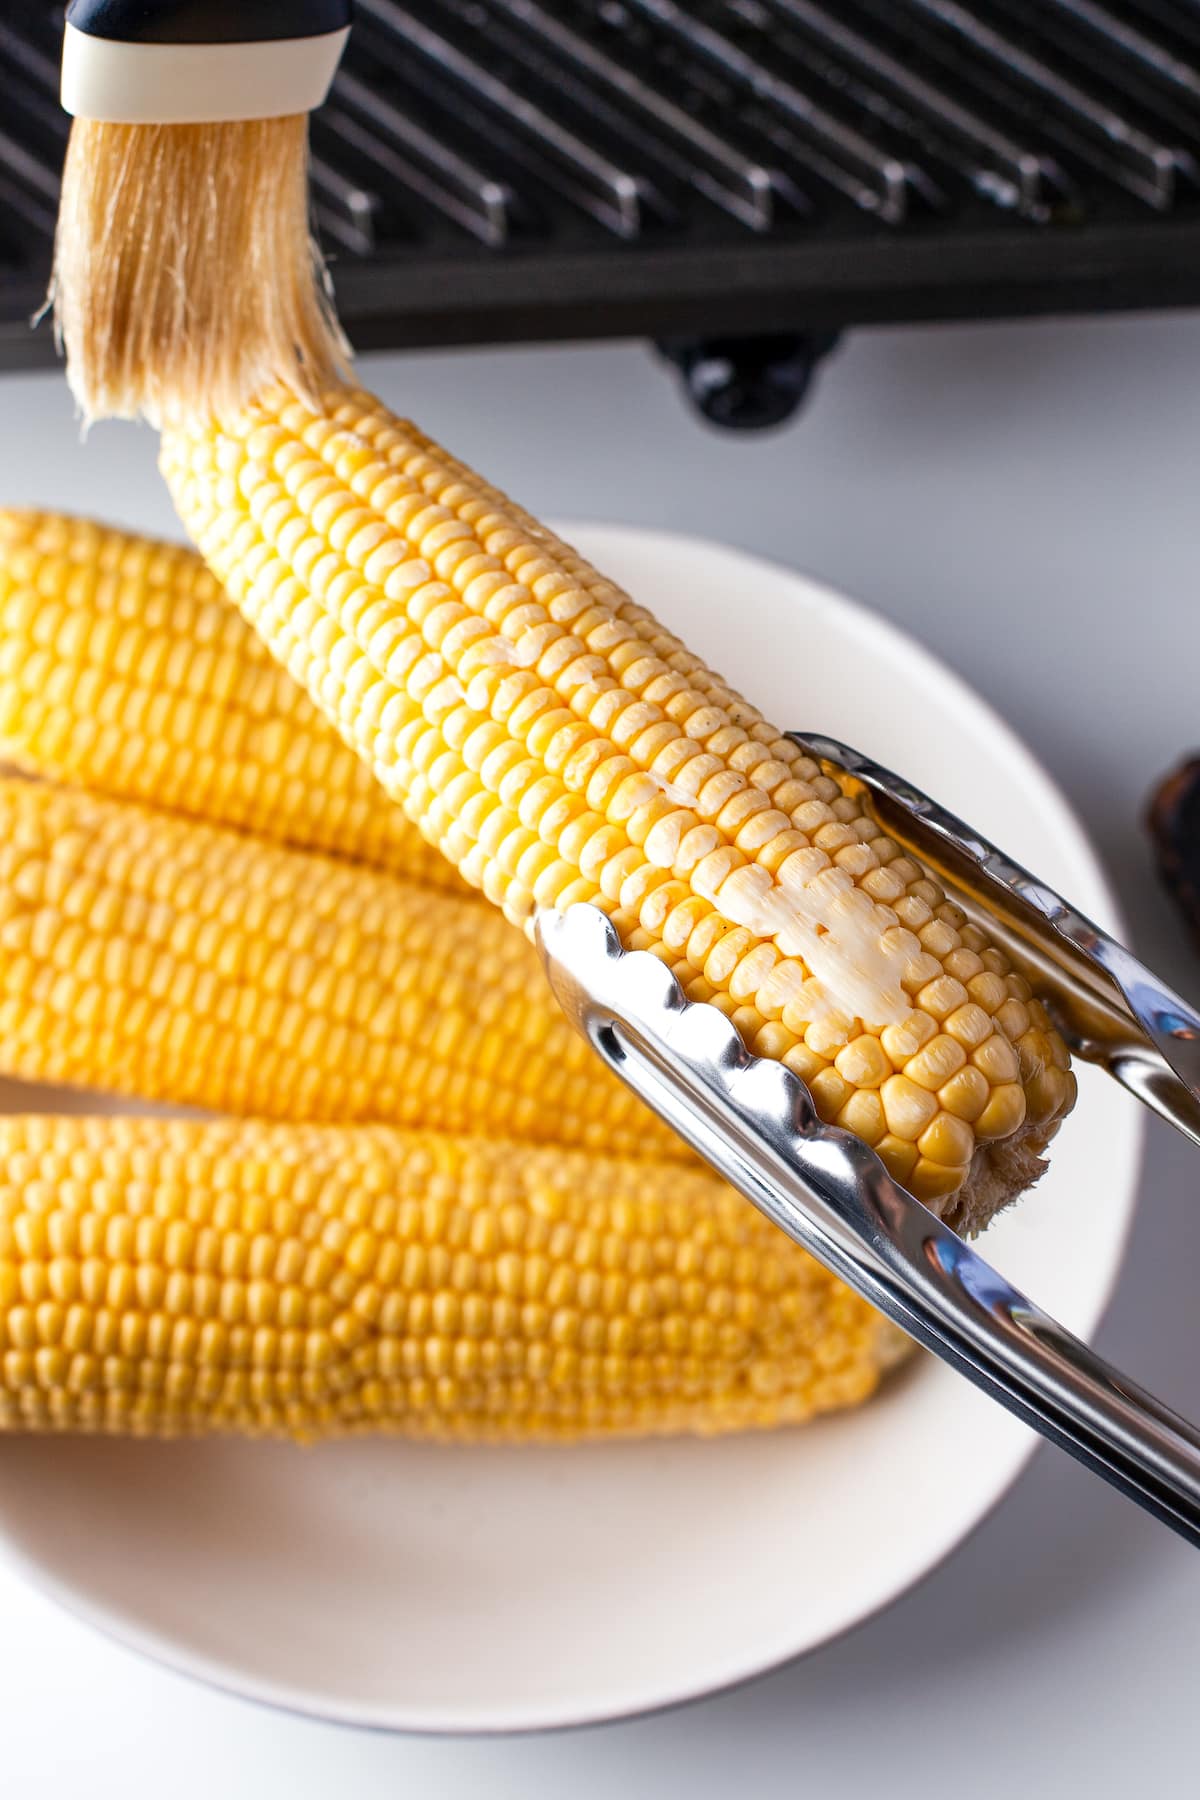 tongs holding corn on the cob